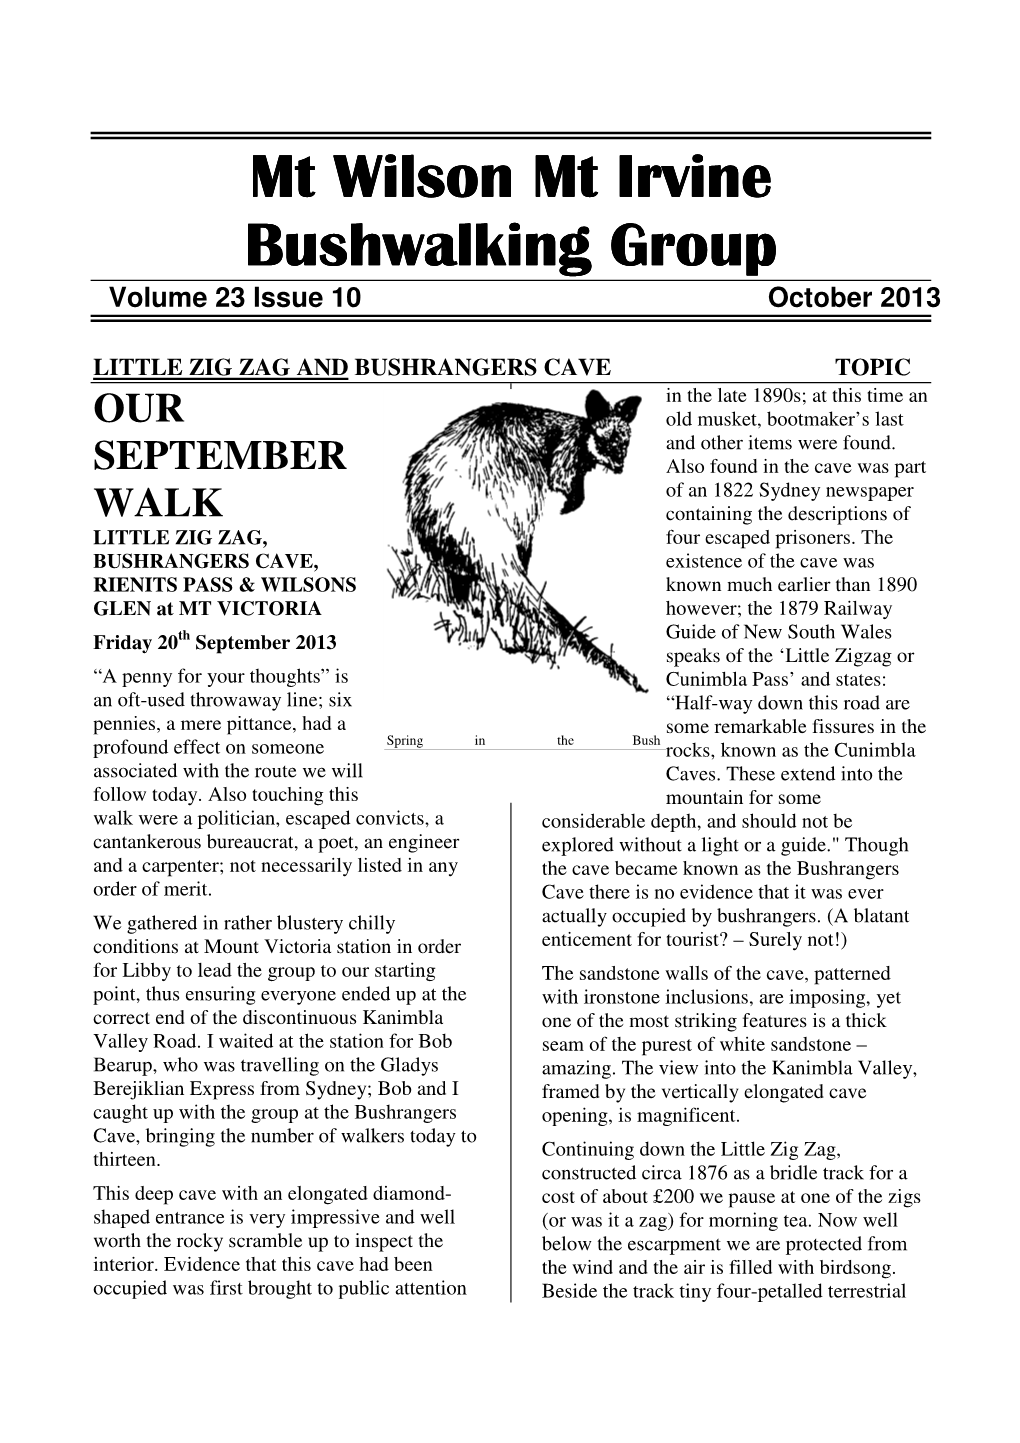 Mt Wilson Mt Irvine Bushwalking Group Volume 23 Issue 10 October 2013